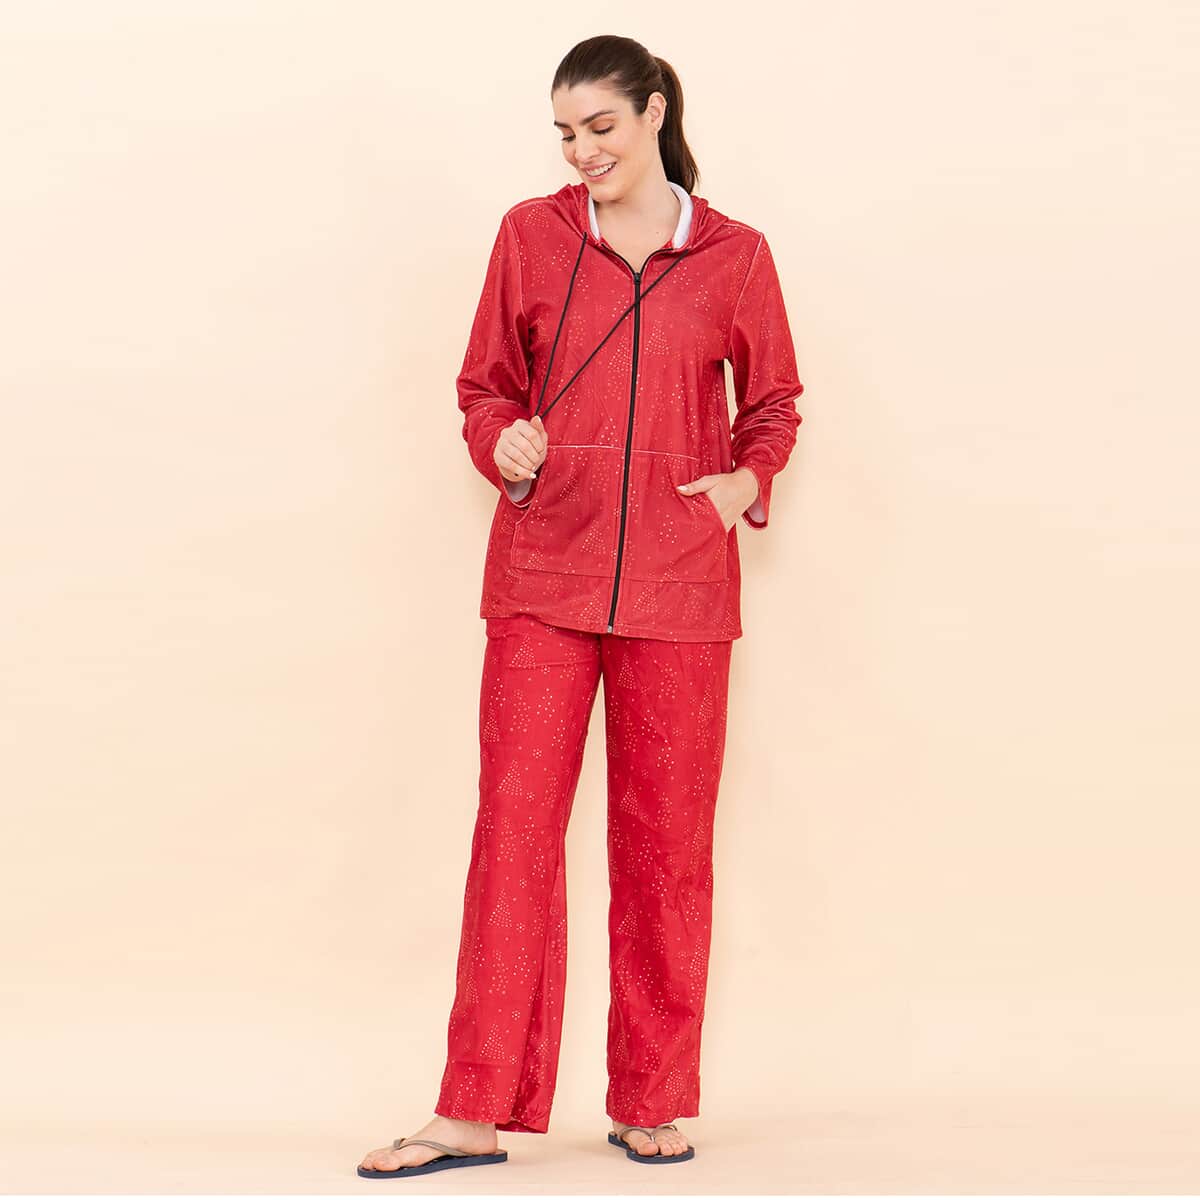 TAMSY Red Sparkle Printed Brushed Flannel Track Suit Set - L image number 2